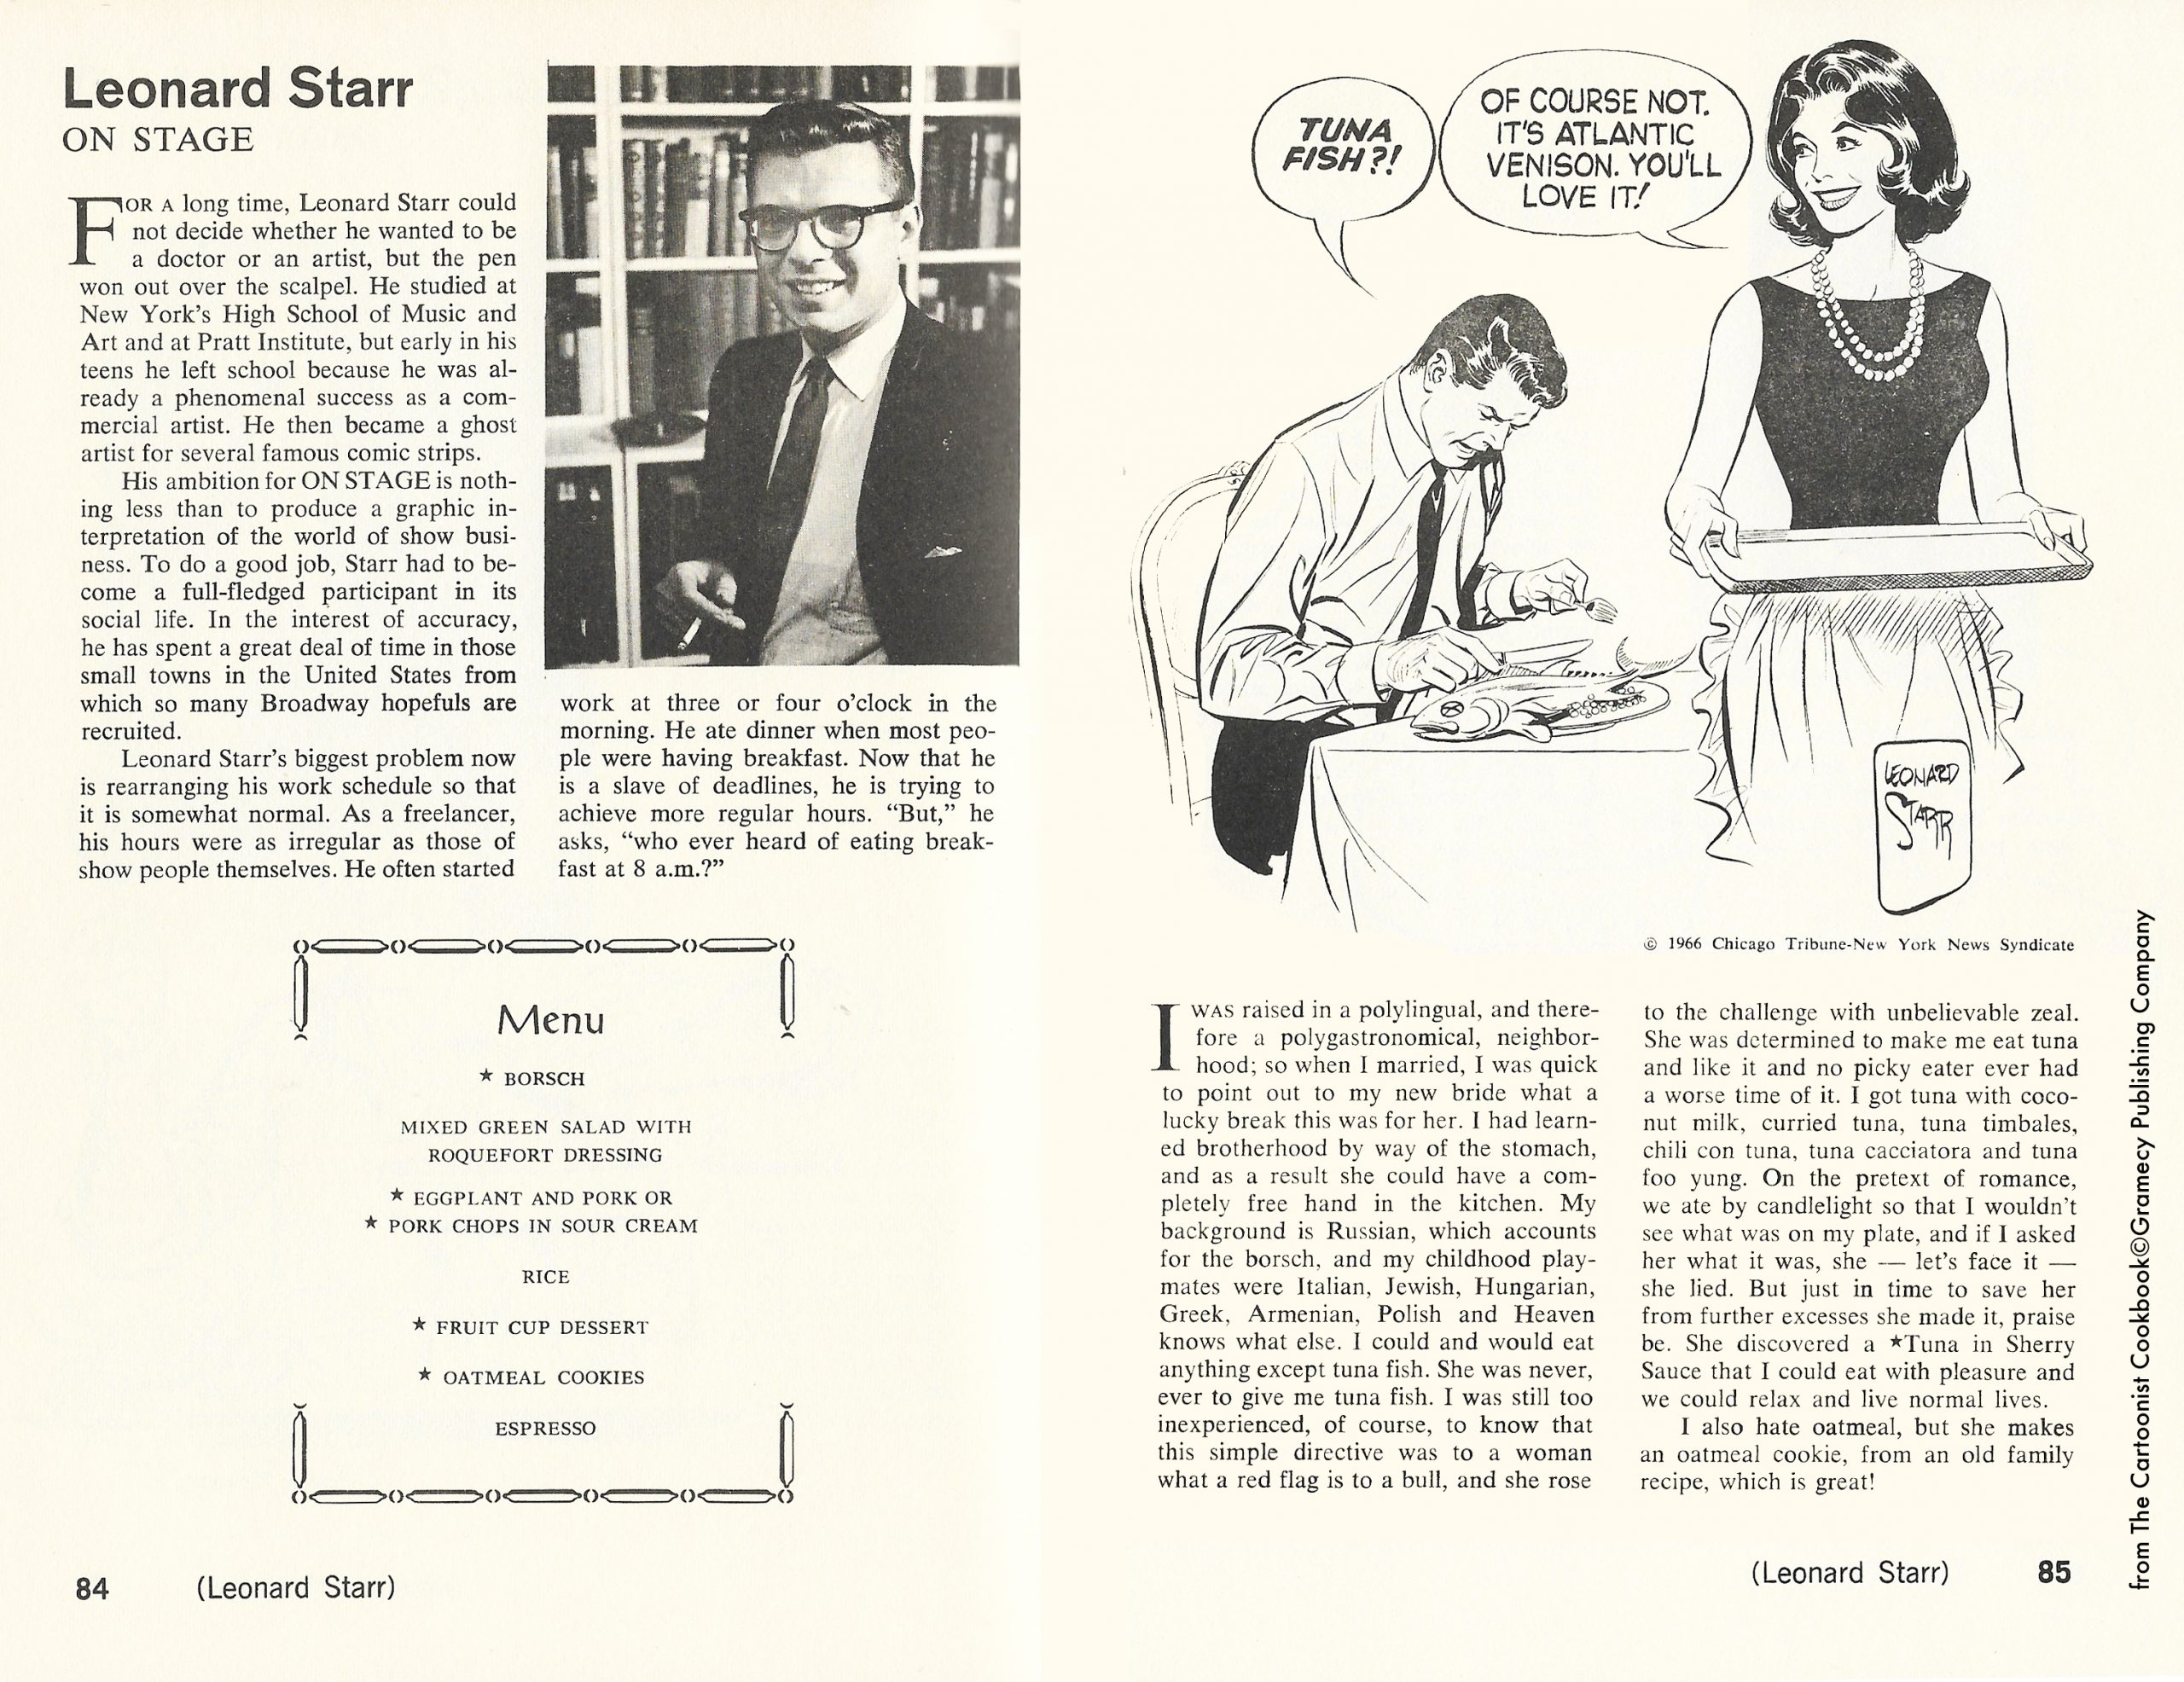 Leonard Starr and Mary Perkins menu